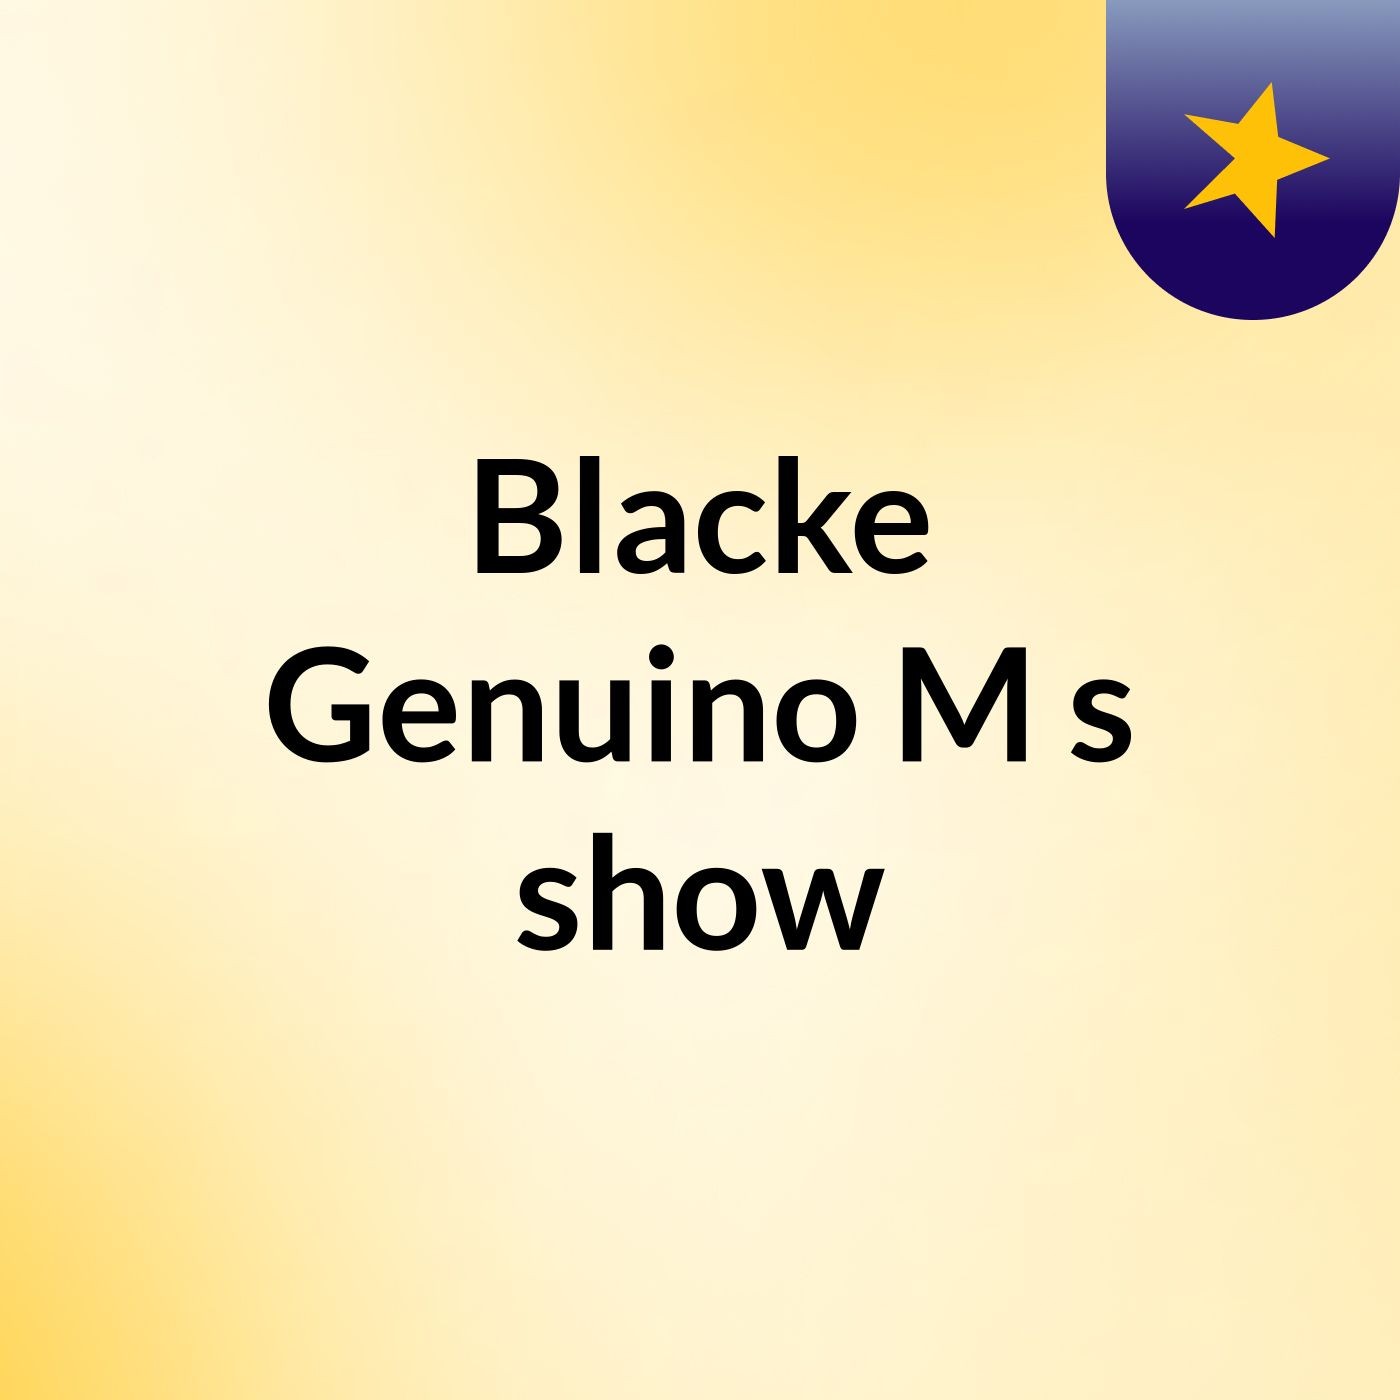 Blacke Genuino M's show